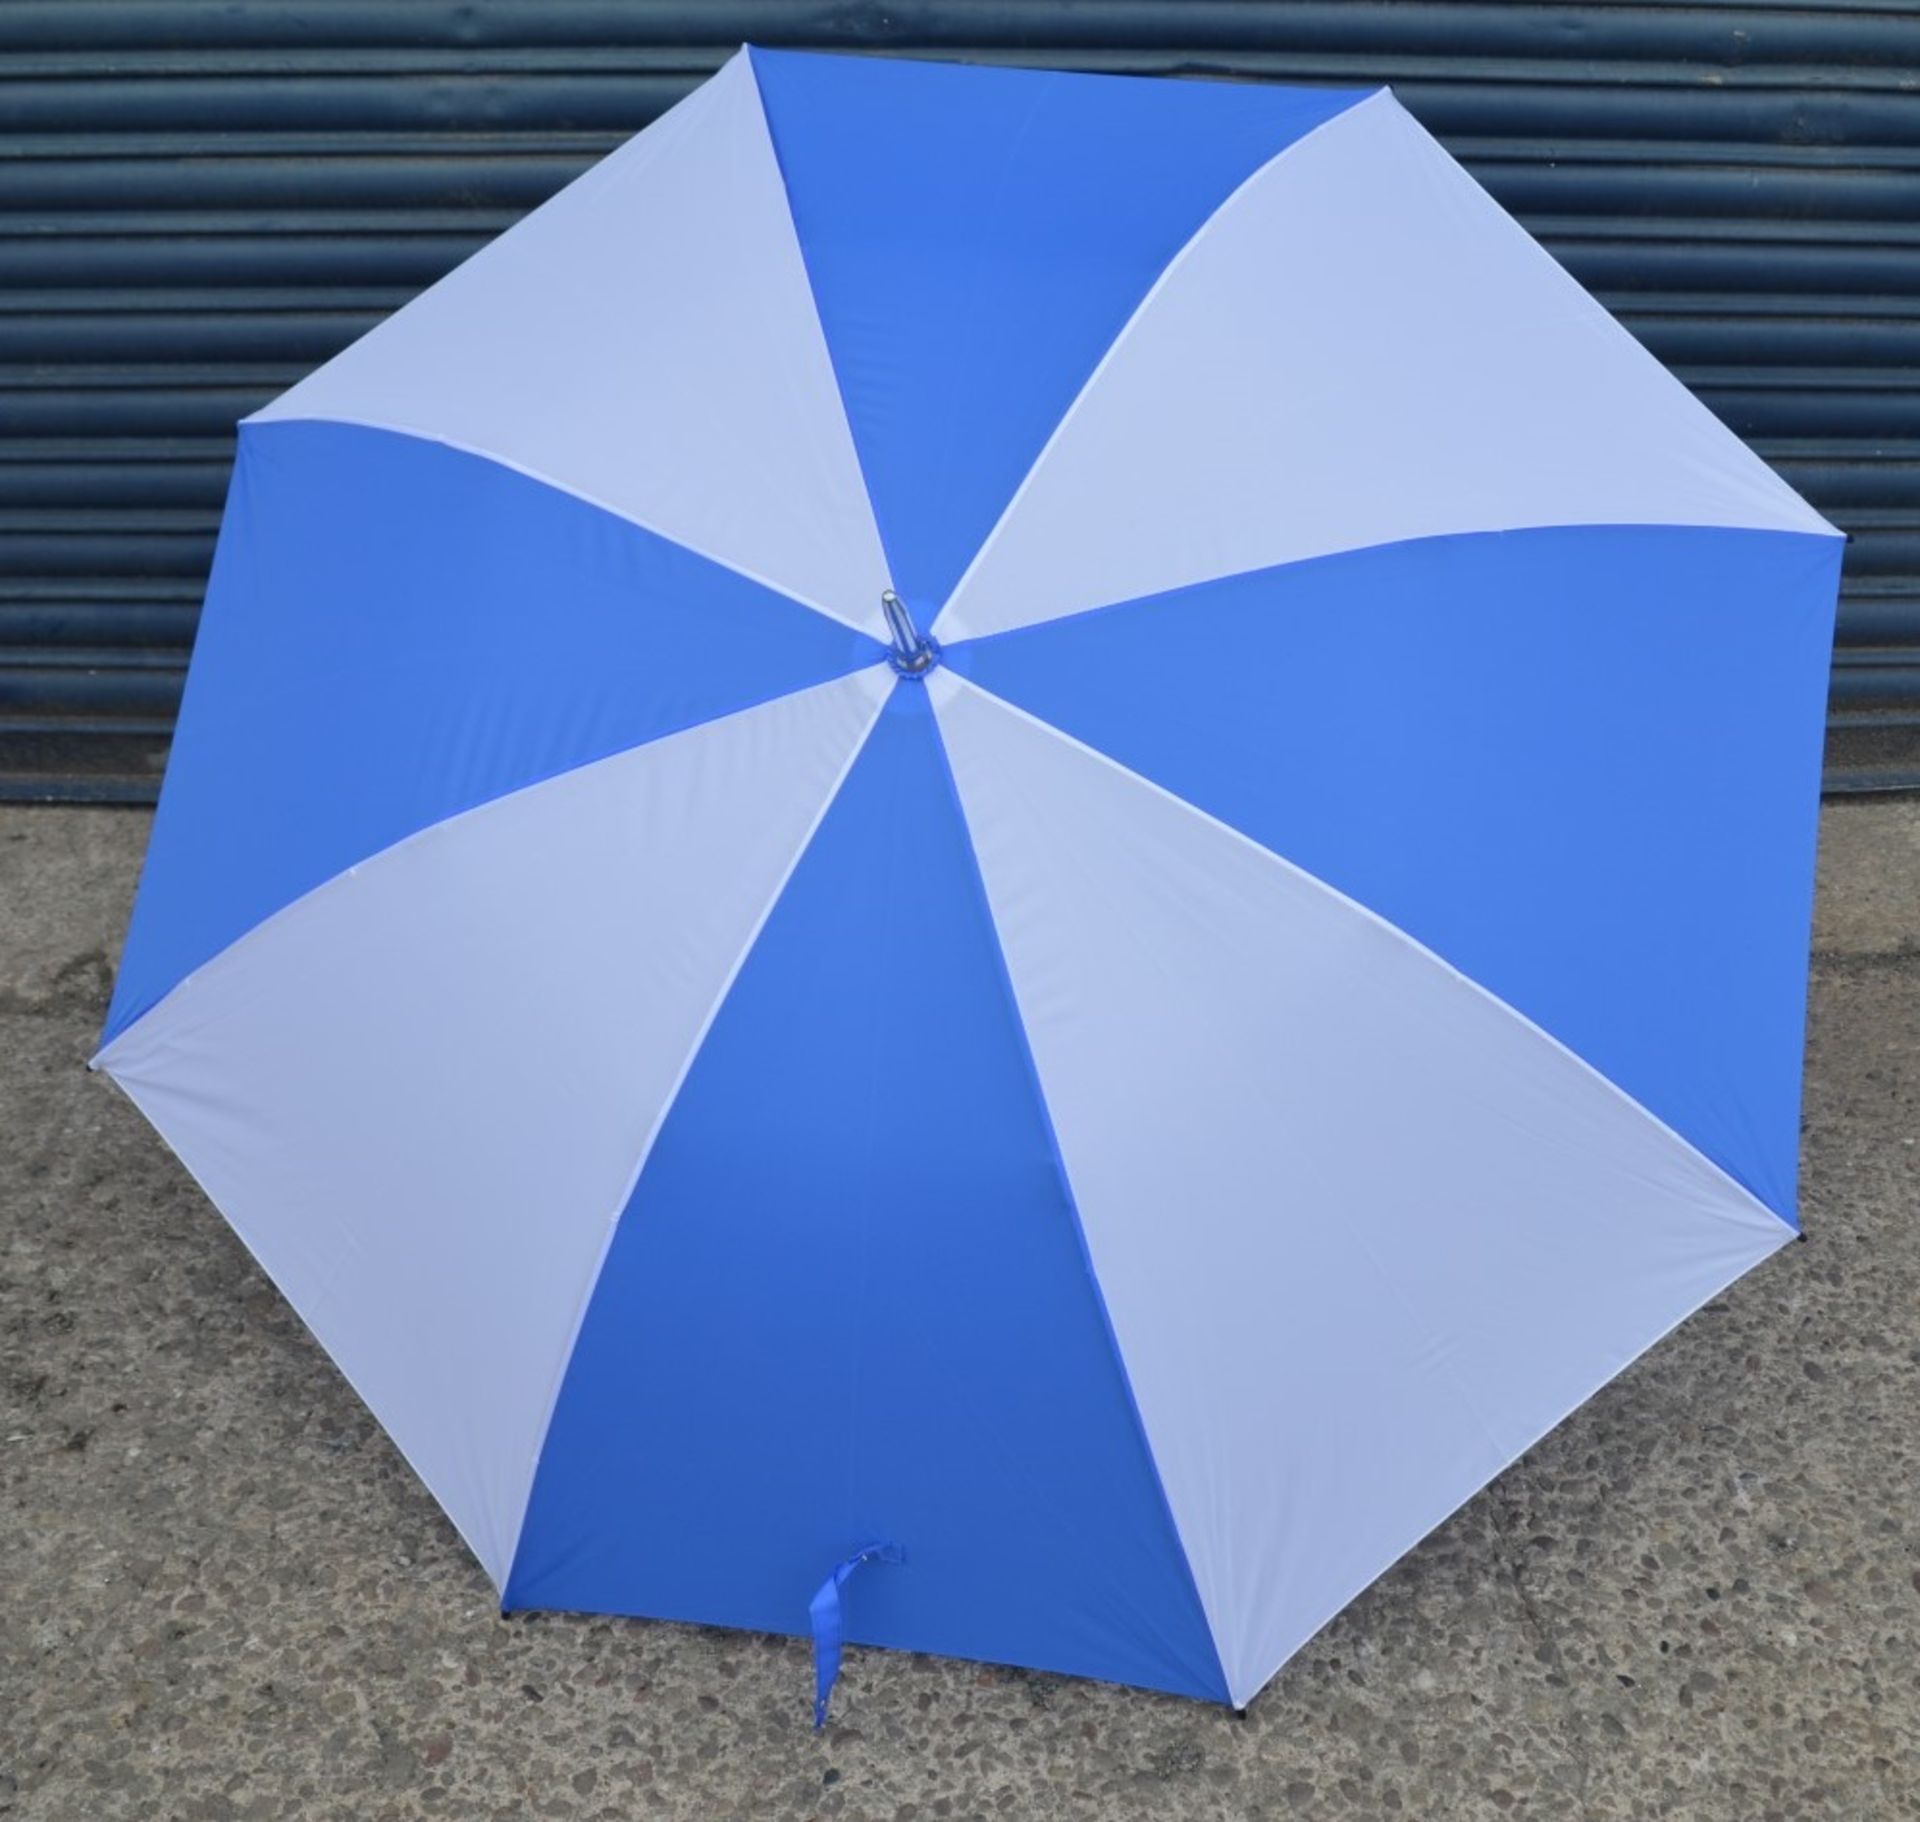 24 x Proline Golf Umbrellas - Colour: Light Blue And White - Brand New Sealed Stock - Dimensions: